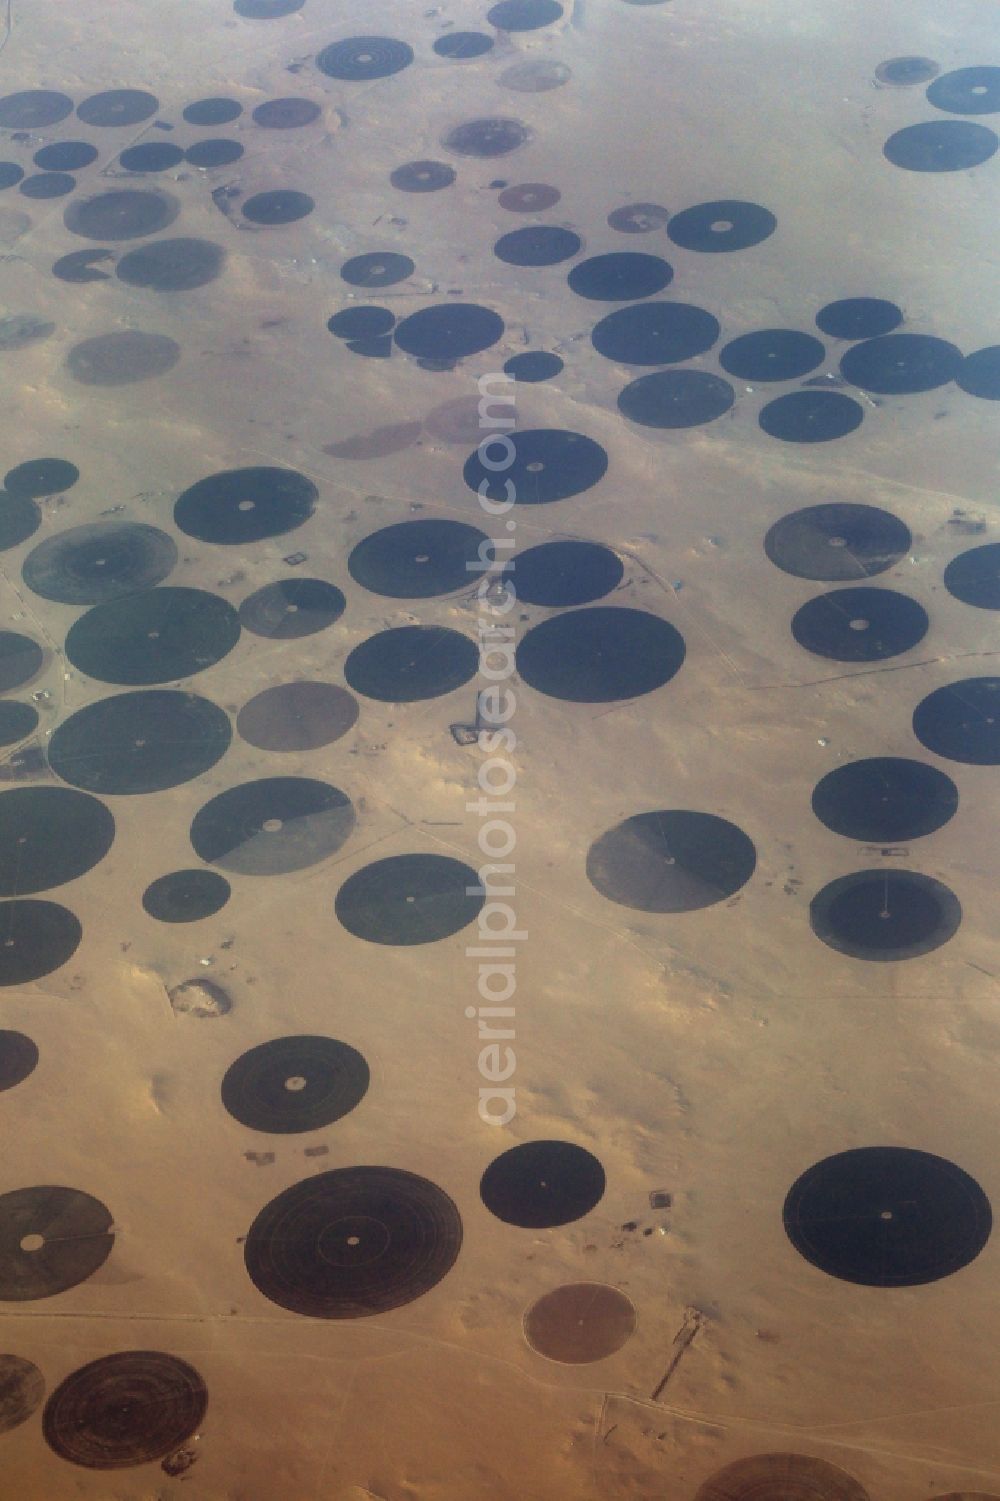 Qaryat Al Ulya from above - Desert landscape with artificial irrigation circles at Qaryat Al Ulya in Eastern Province, Saudi-Arabia